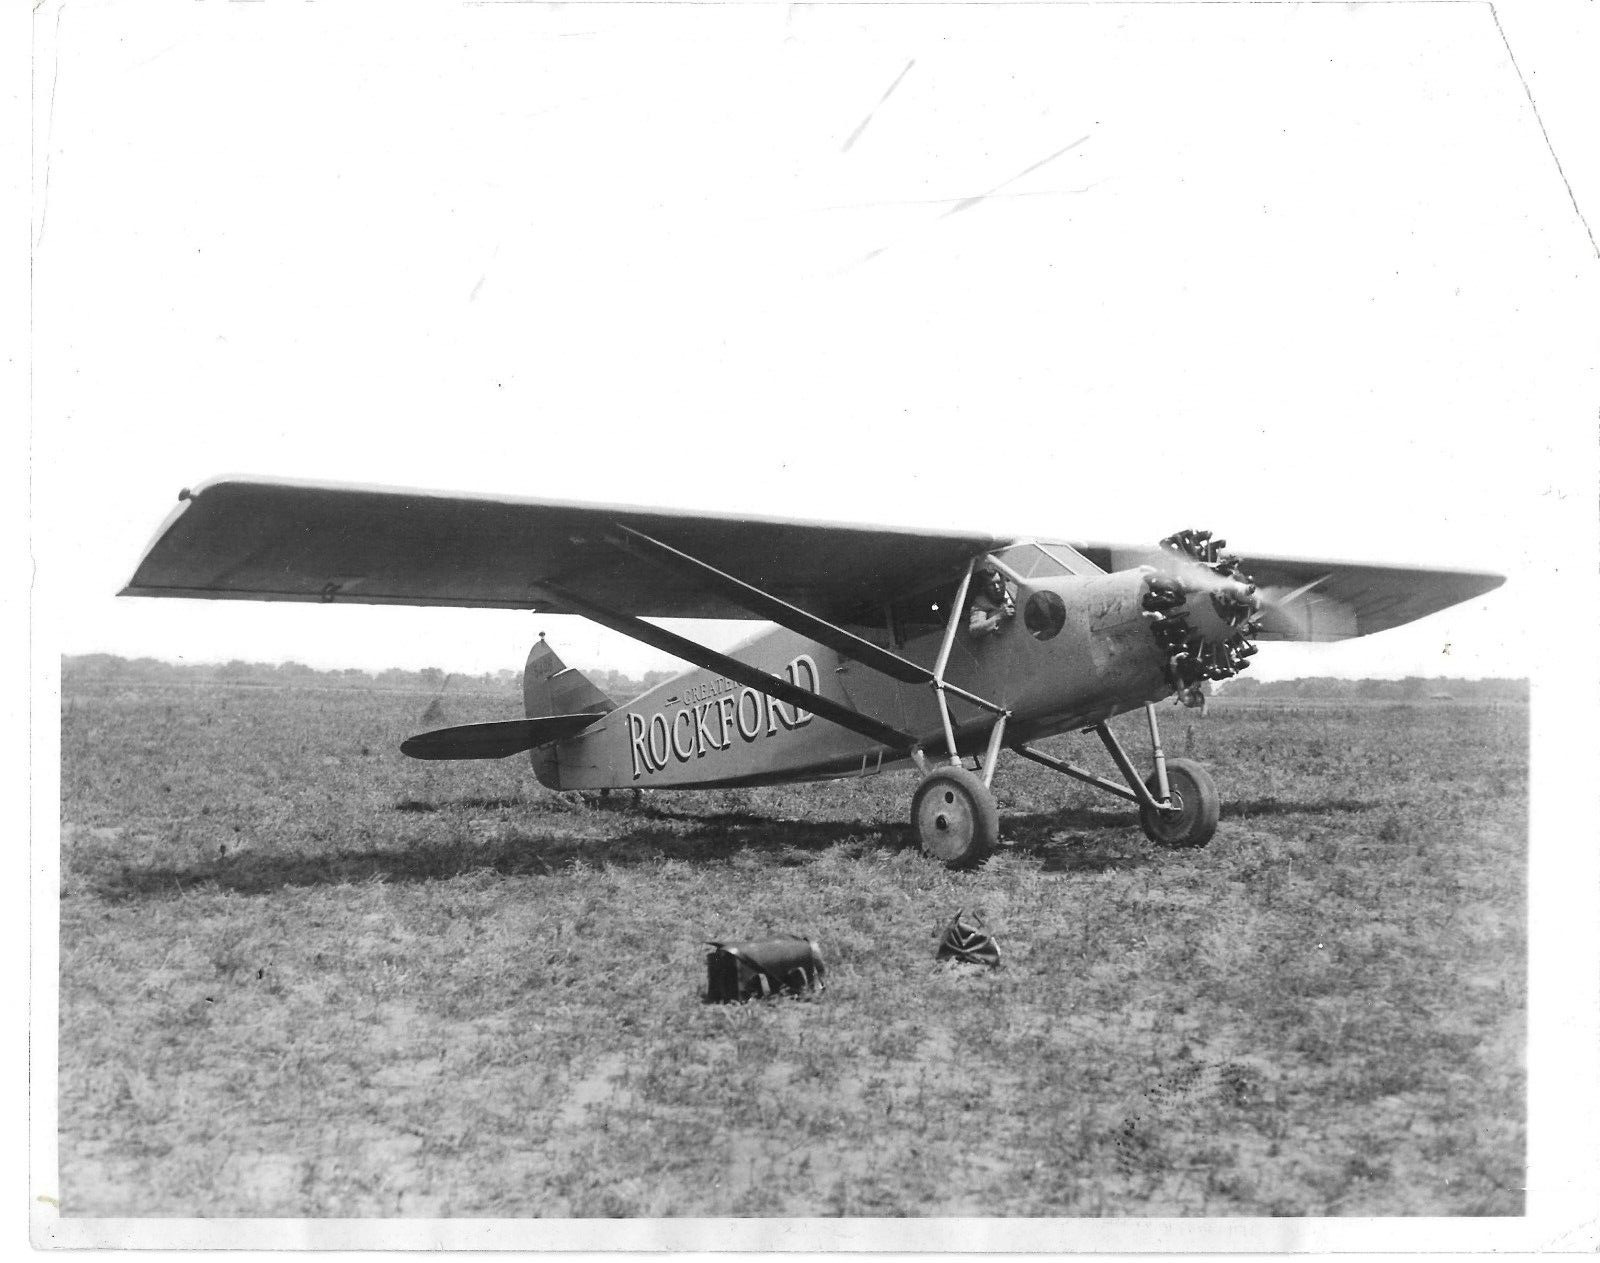 1928 Golden Age Aviation Photo Aircraft Greater Rockford Illinois Sweden flight